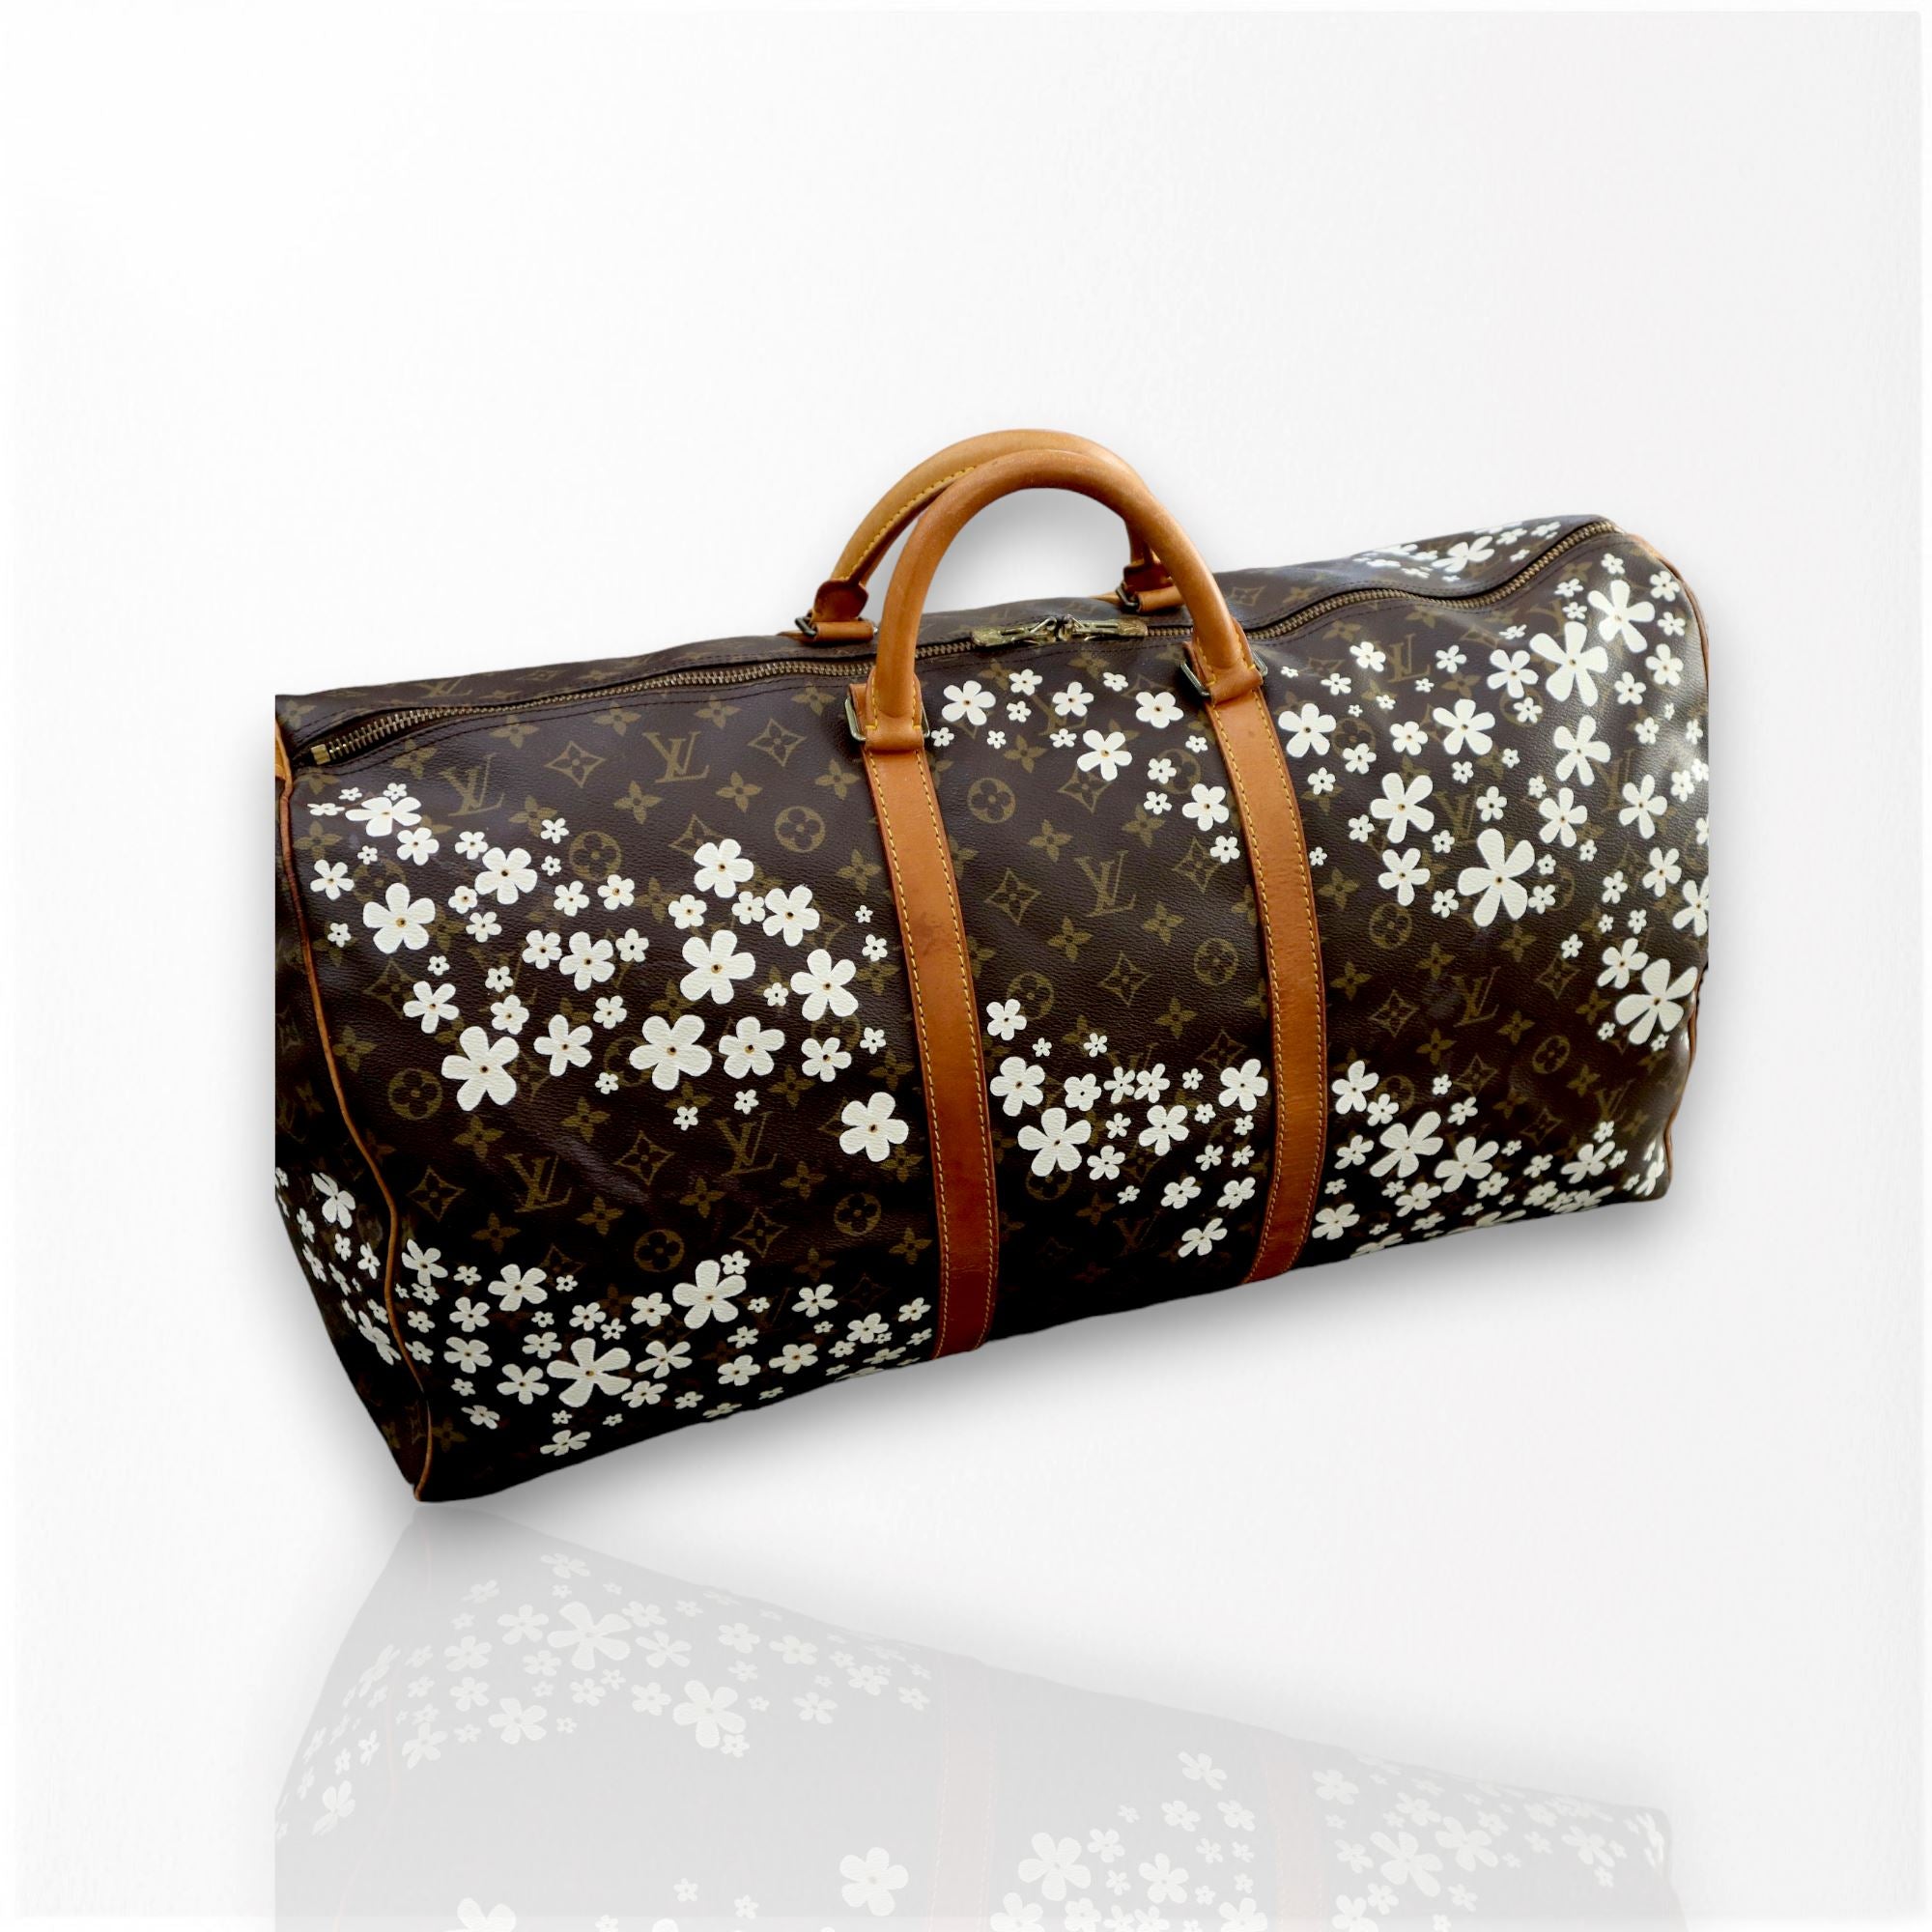 Louis Vuitton Duffle Bags & Louis Vuitton Keepall Handbags for Women, Authenticity Guaranteed